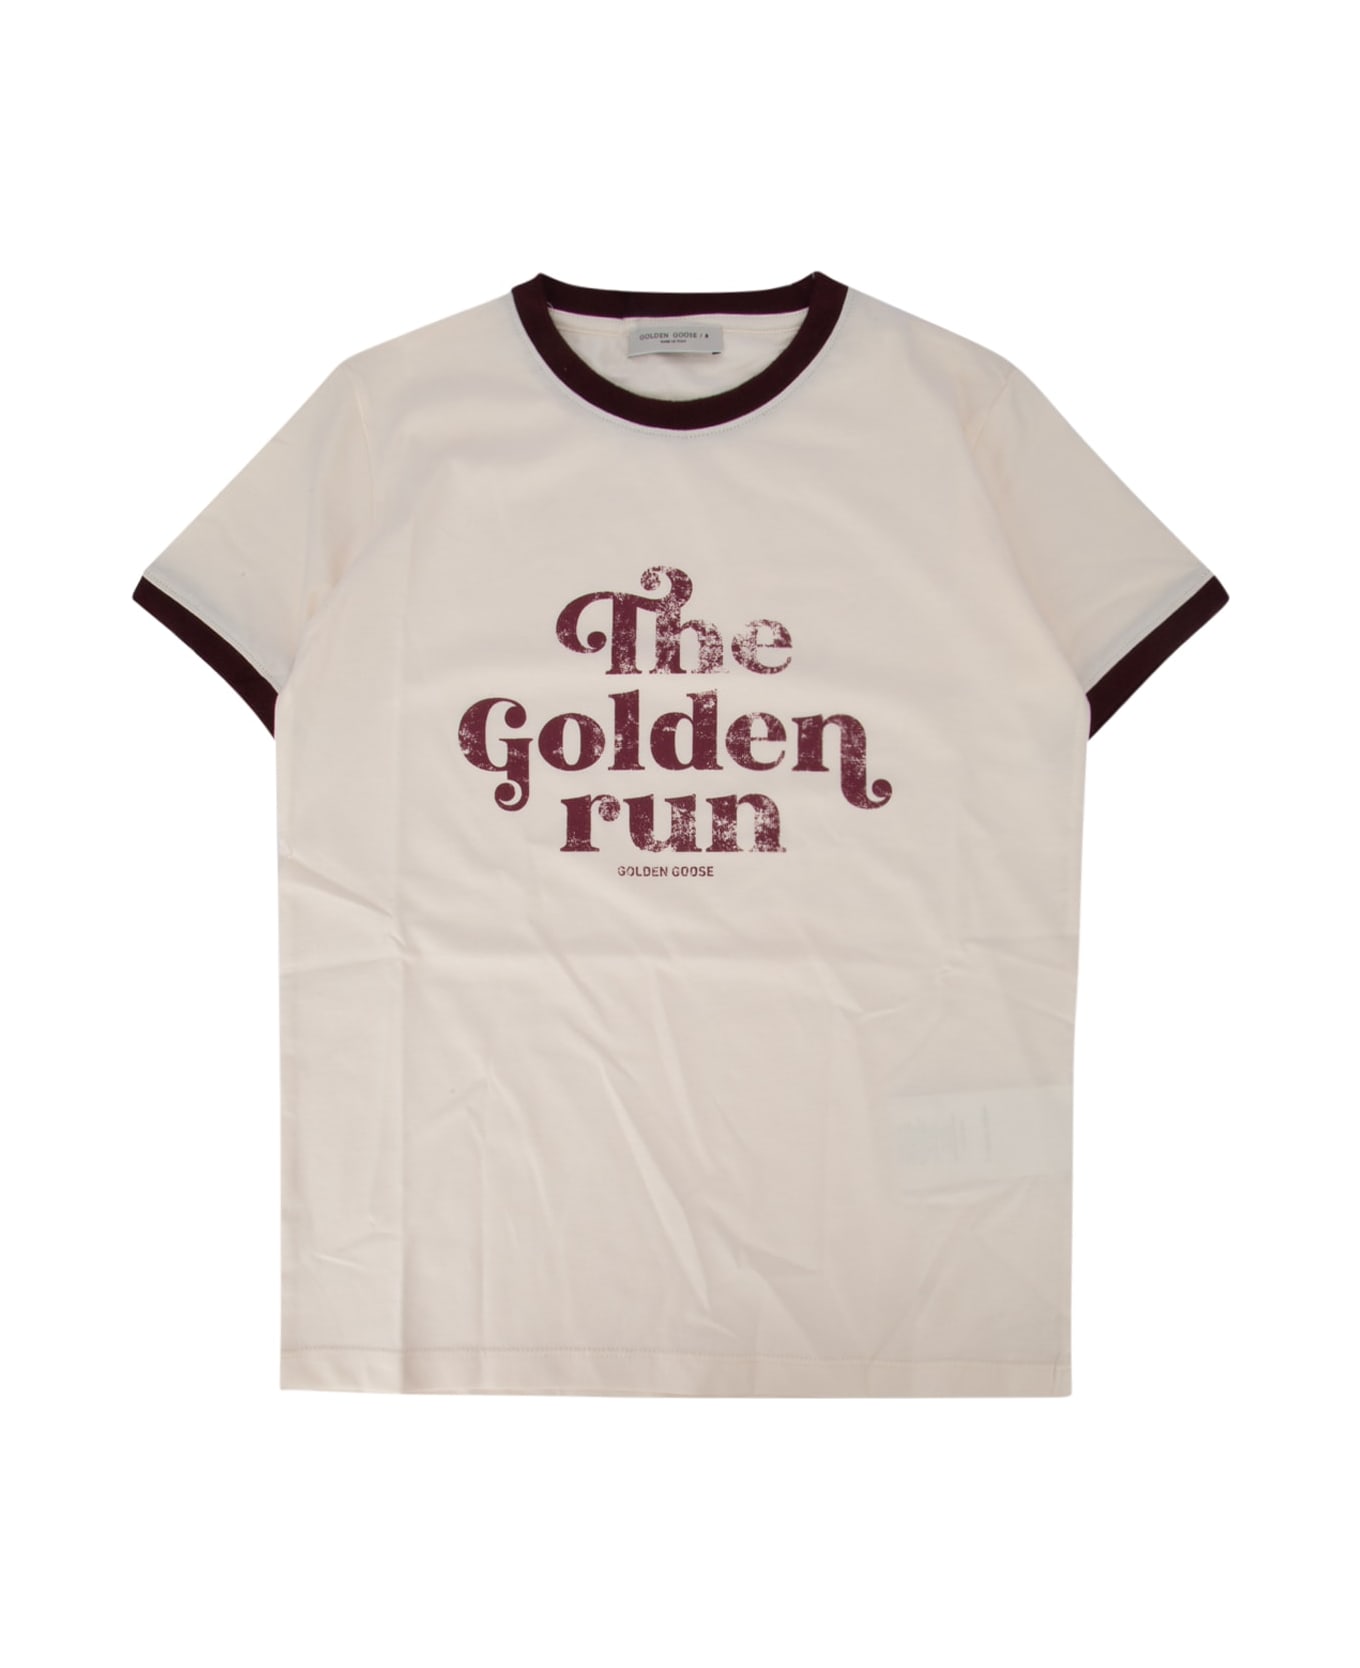 Golden Goose T-shirt - ARTICWOLFWINDSORWINE